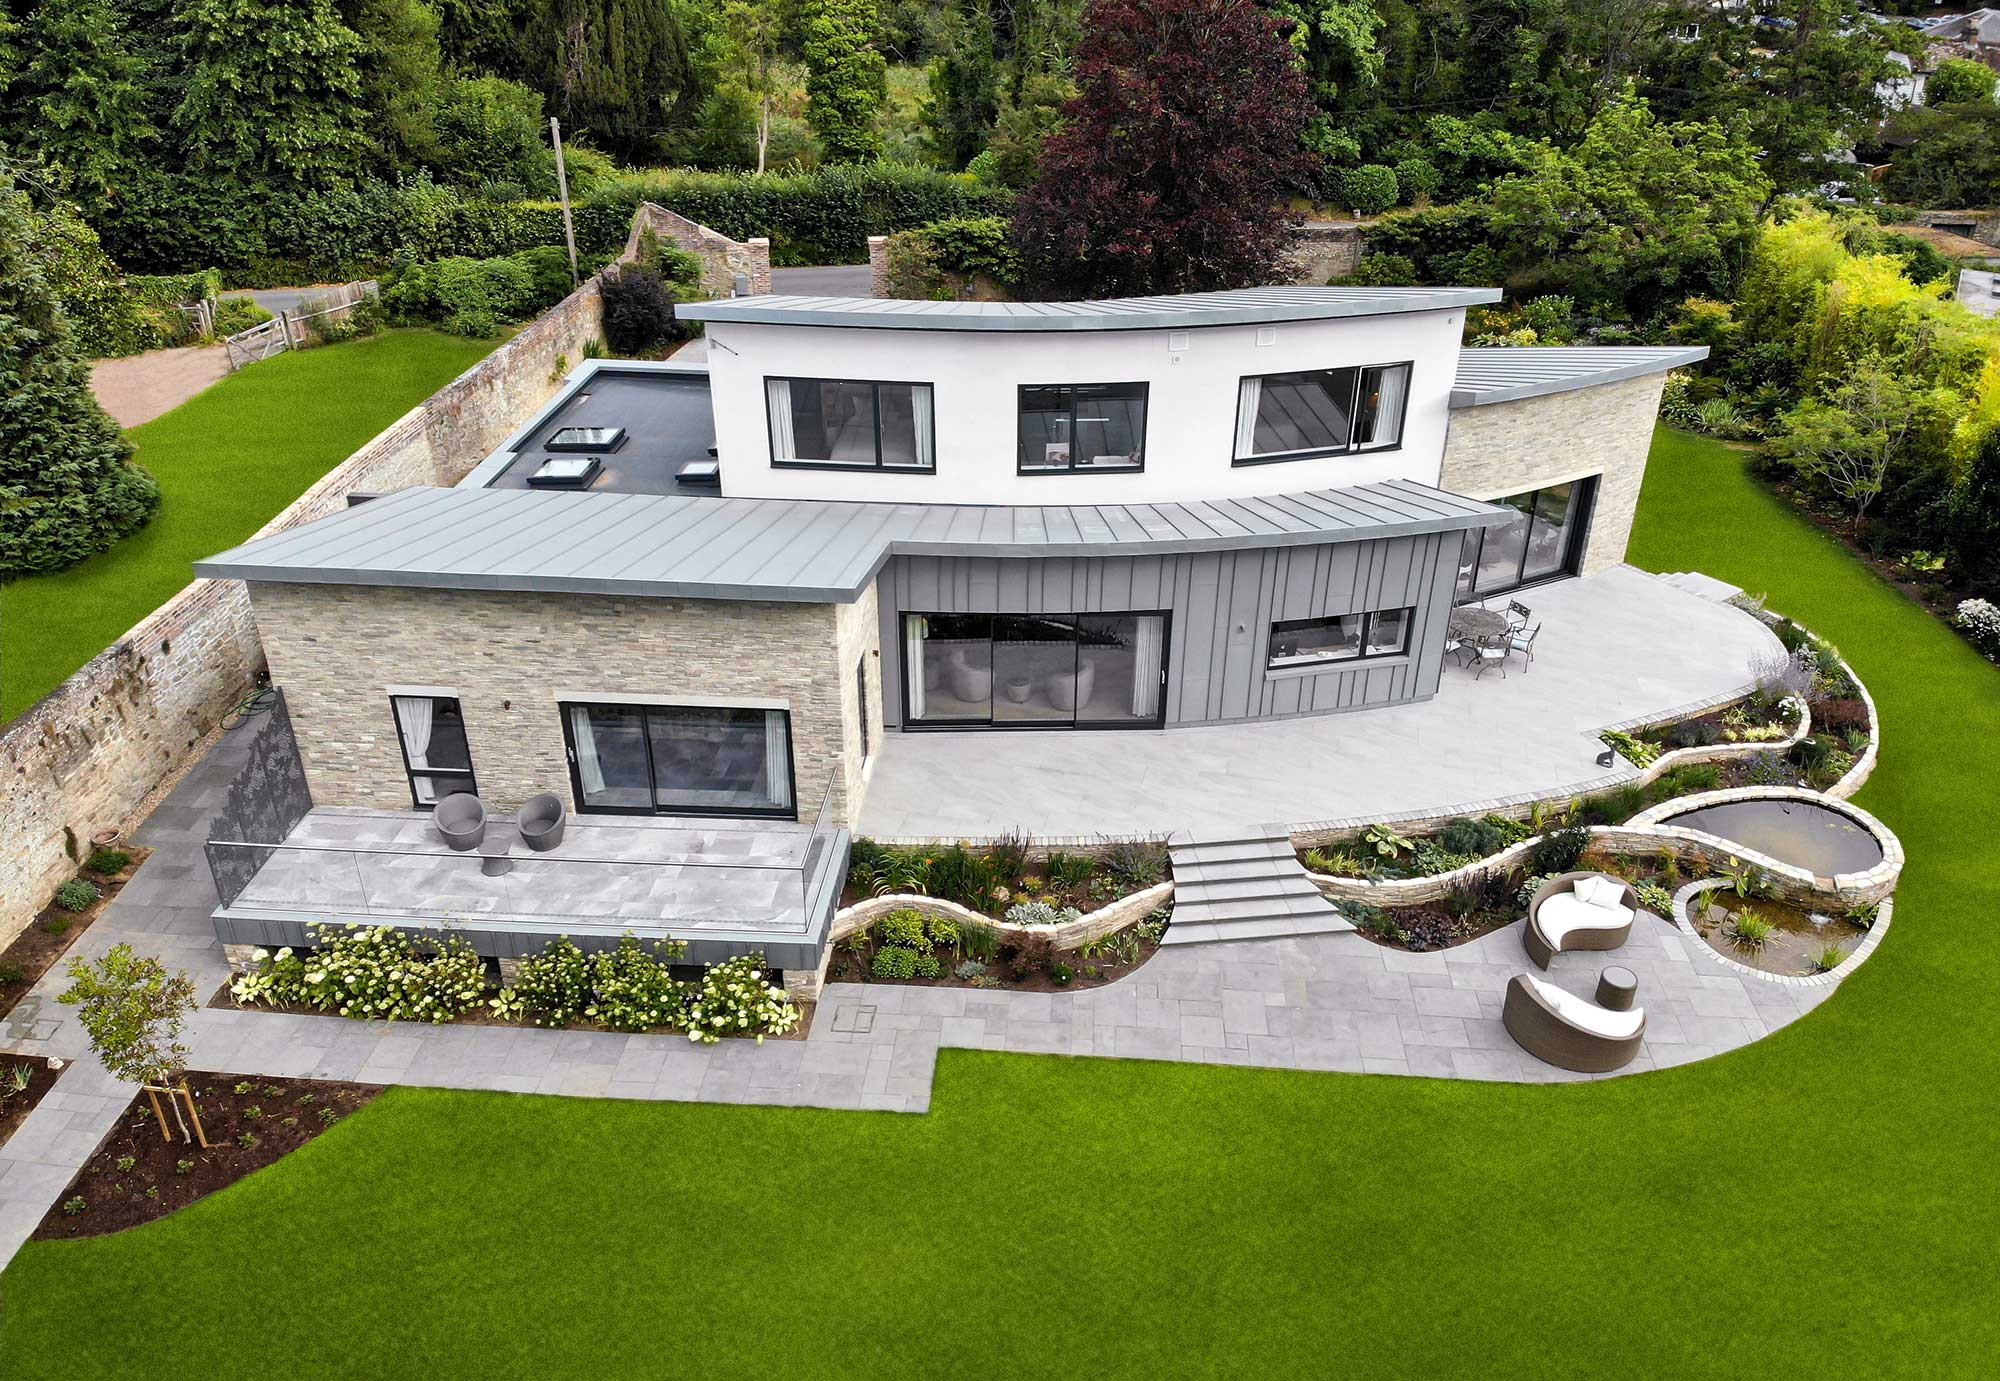 Modern zinc-clad house - Architect Elspeth Beard, buildt by KM Grant 